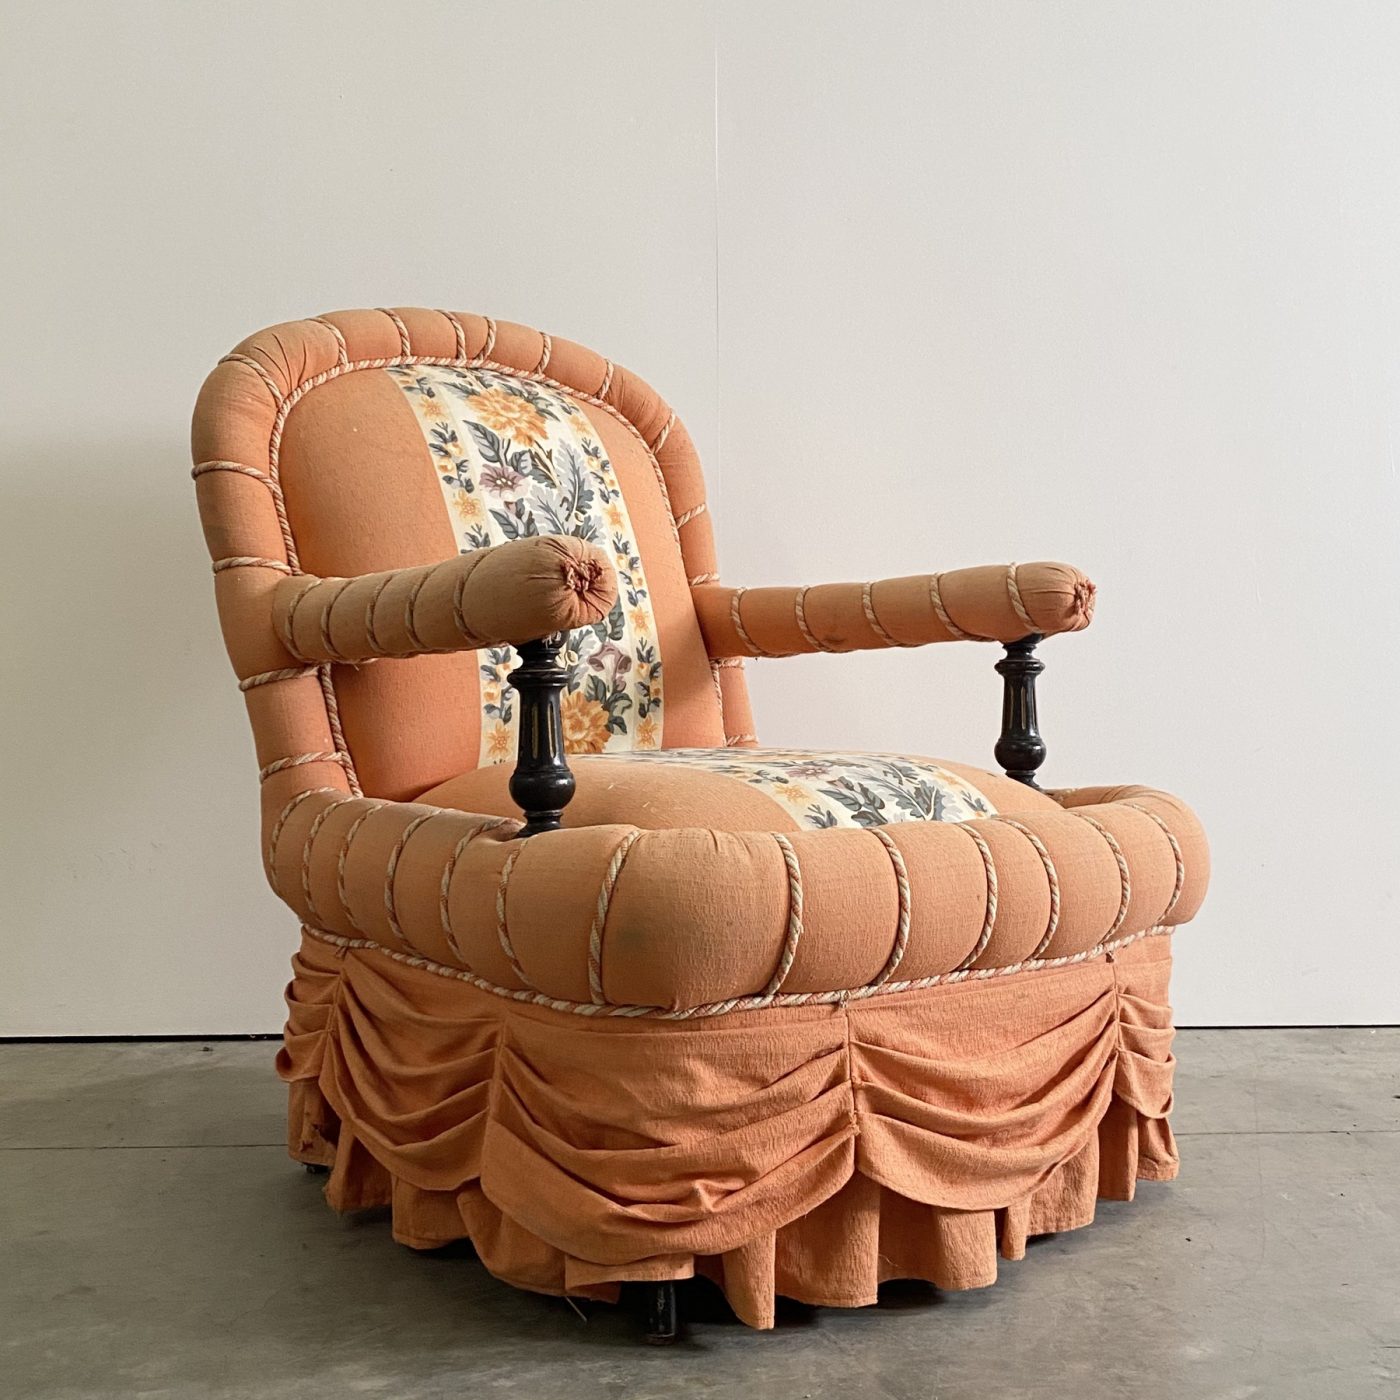 objet-vagabond-napoleon3-armchair0005